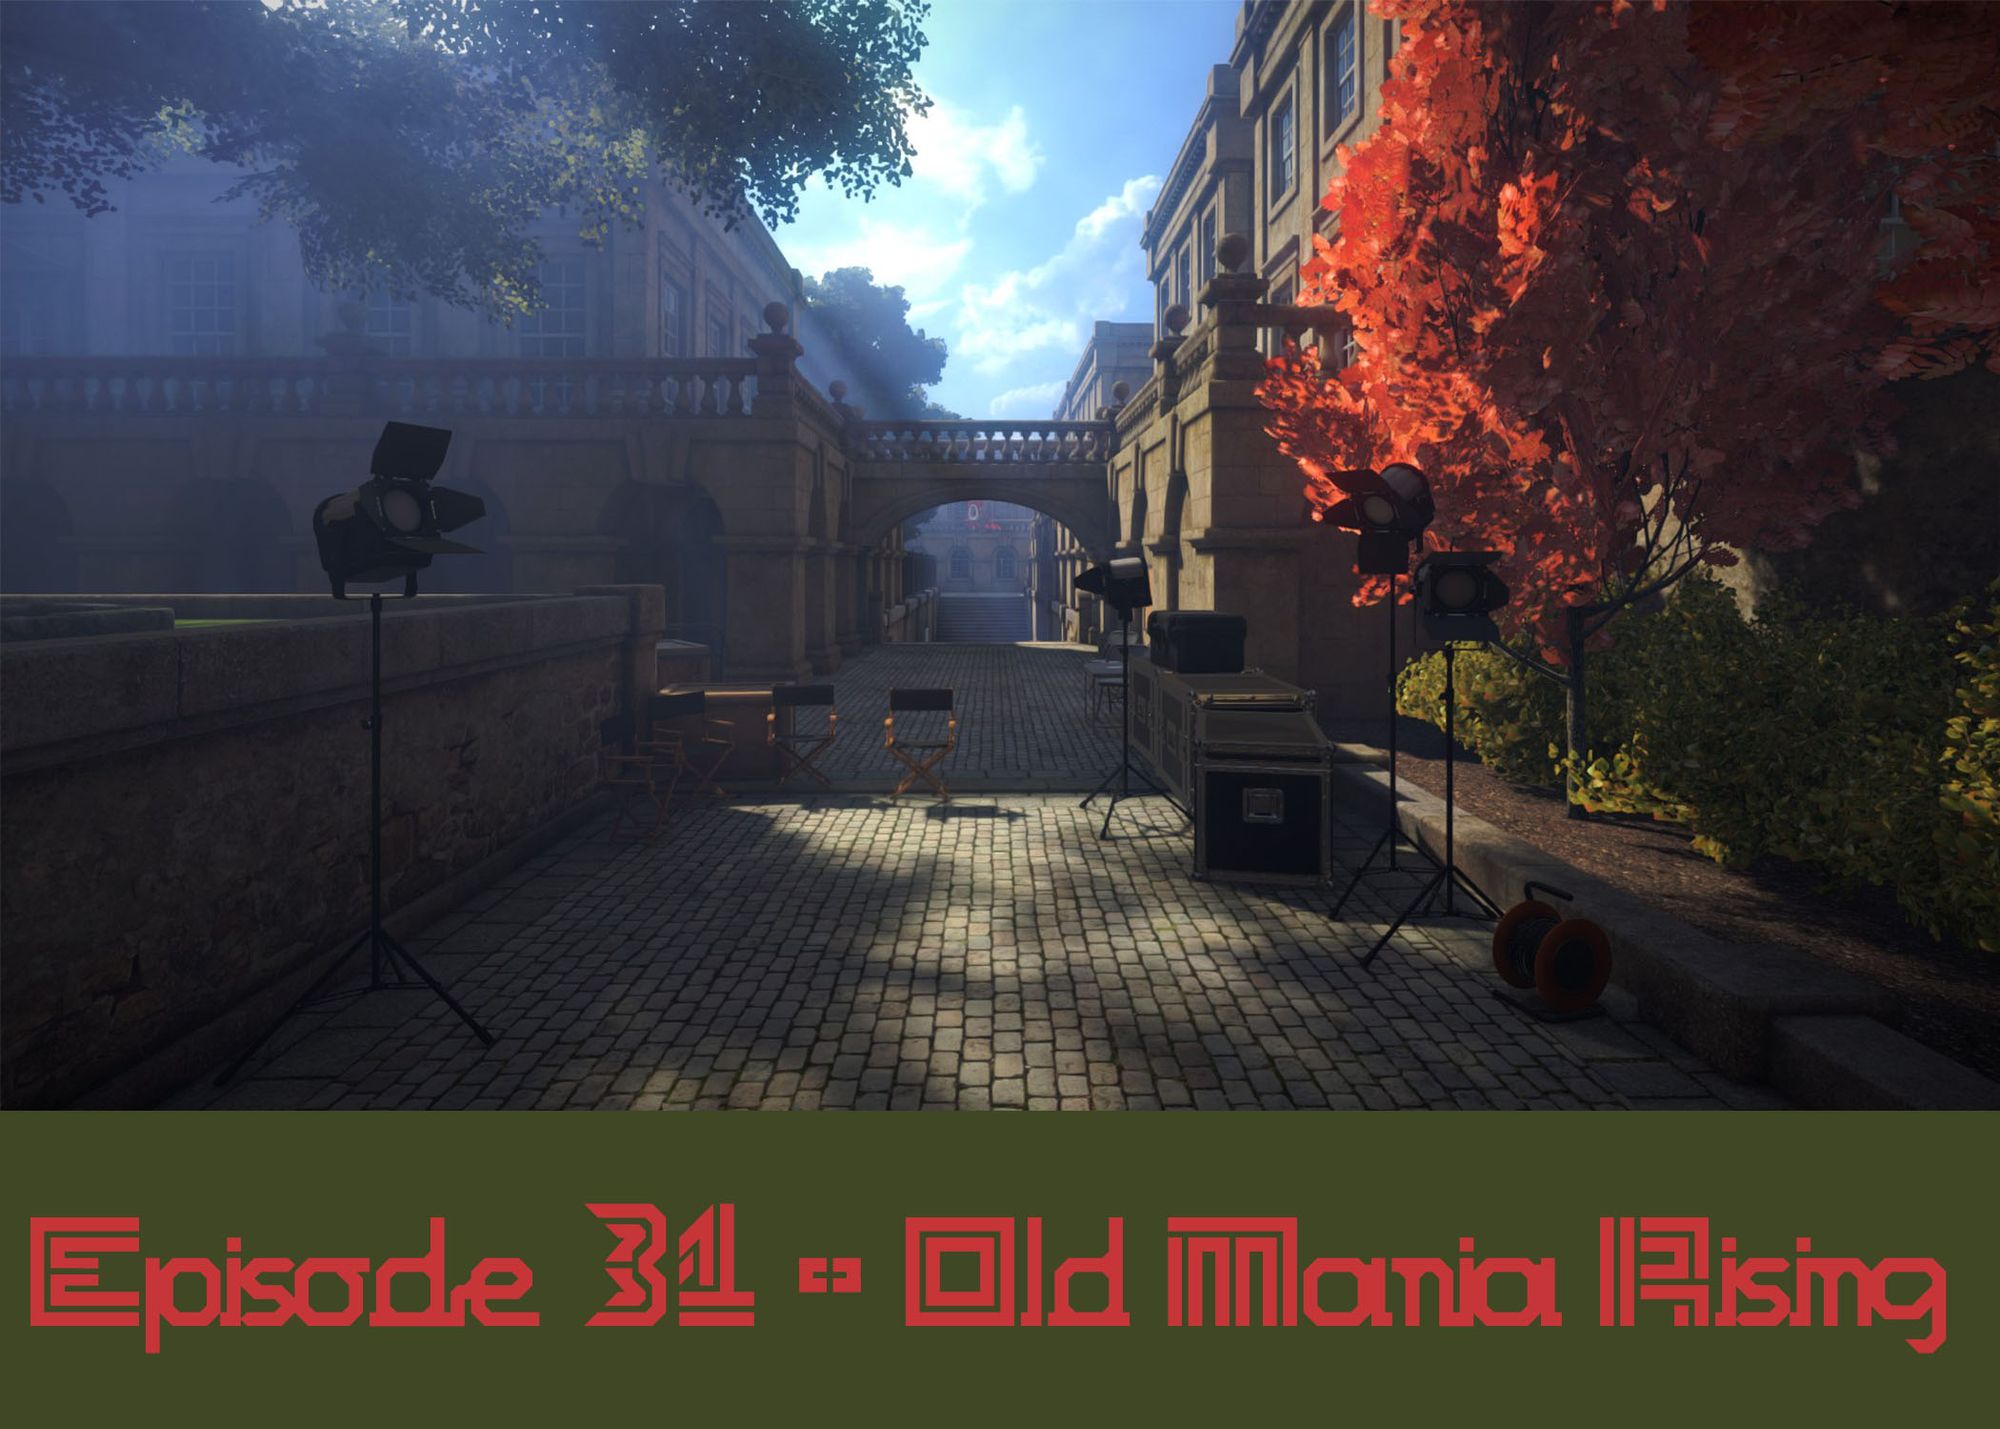 Episode 31 - Old Mania Rising